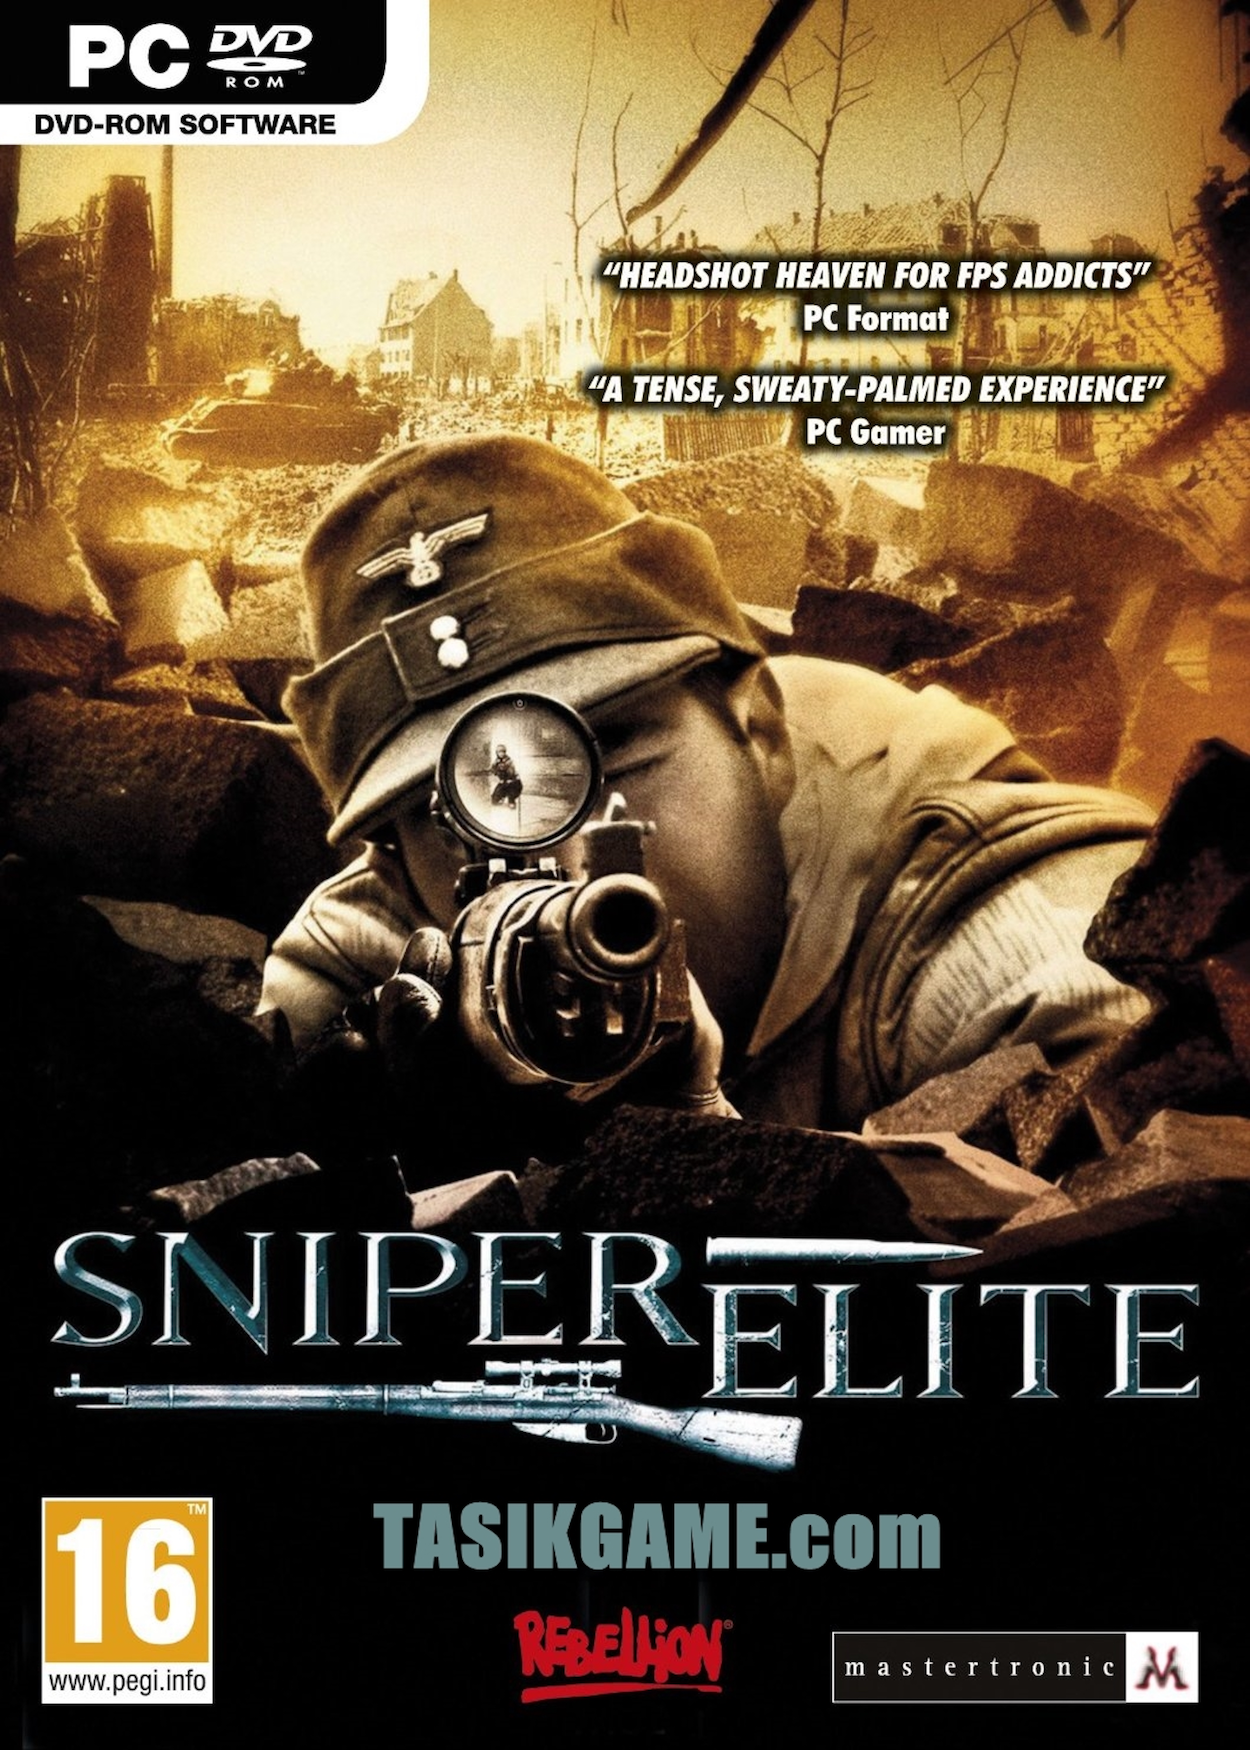 Sniper Sniper Elite Wiki | Fandom